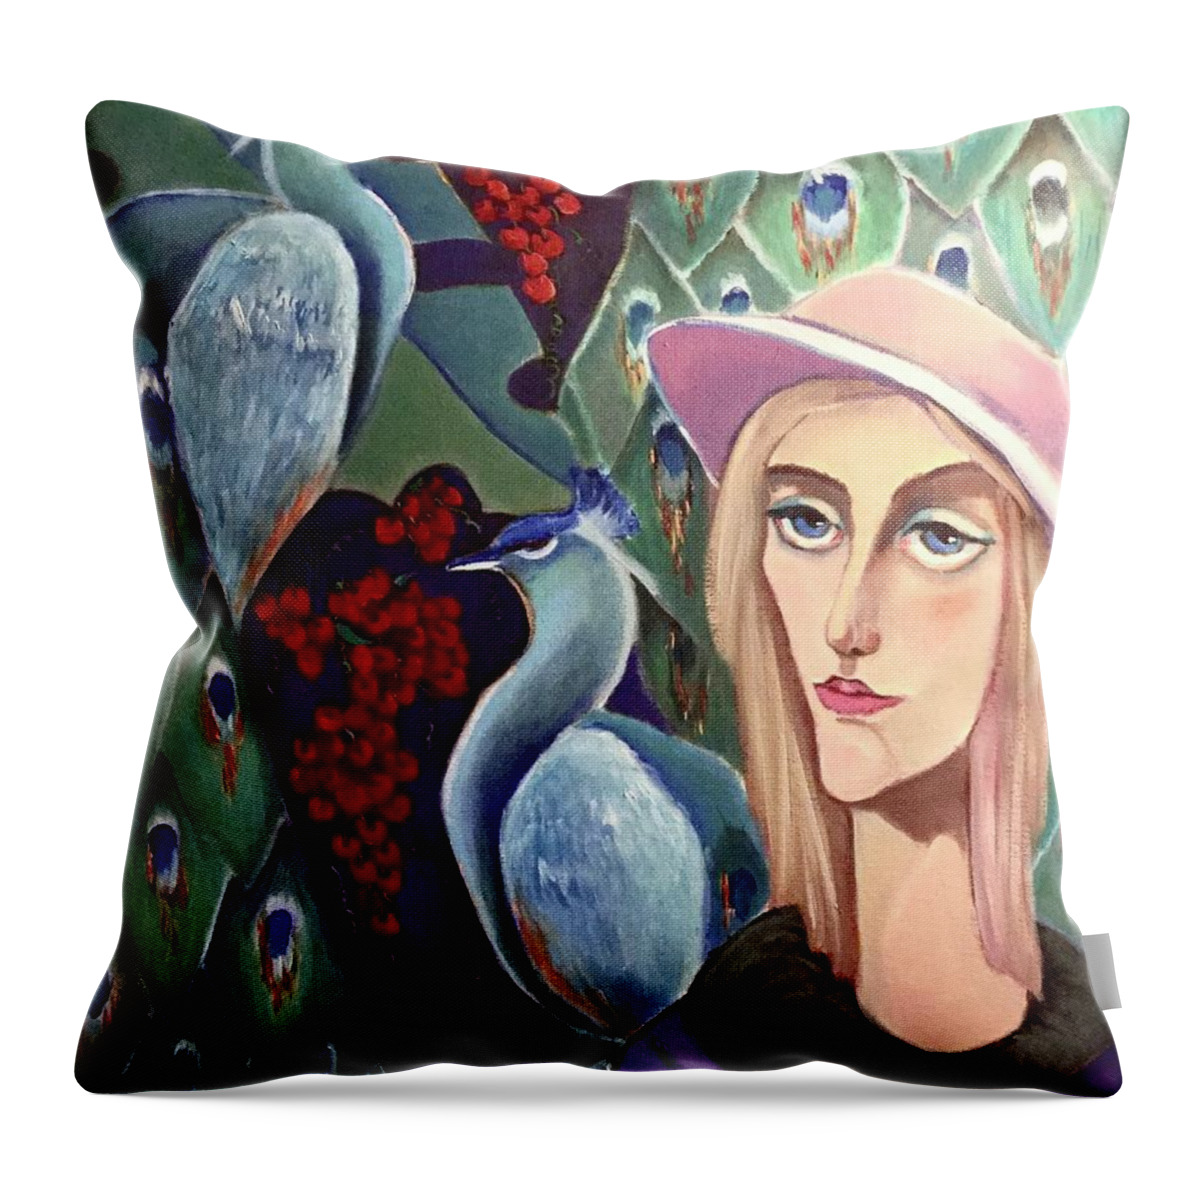 Birds Throw Pillow featuring the painting Bird watcher by Lana Sylber